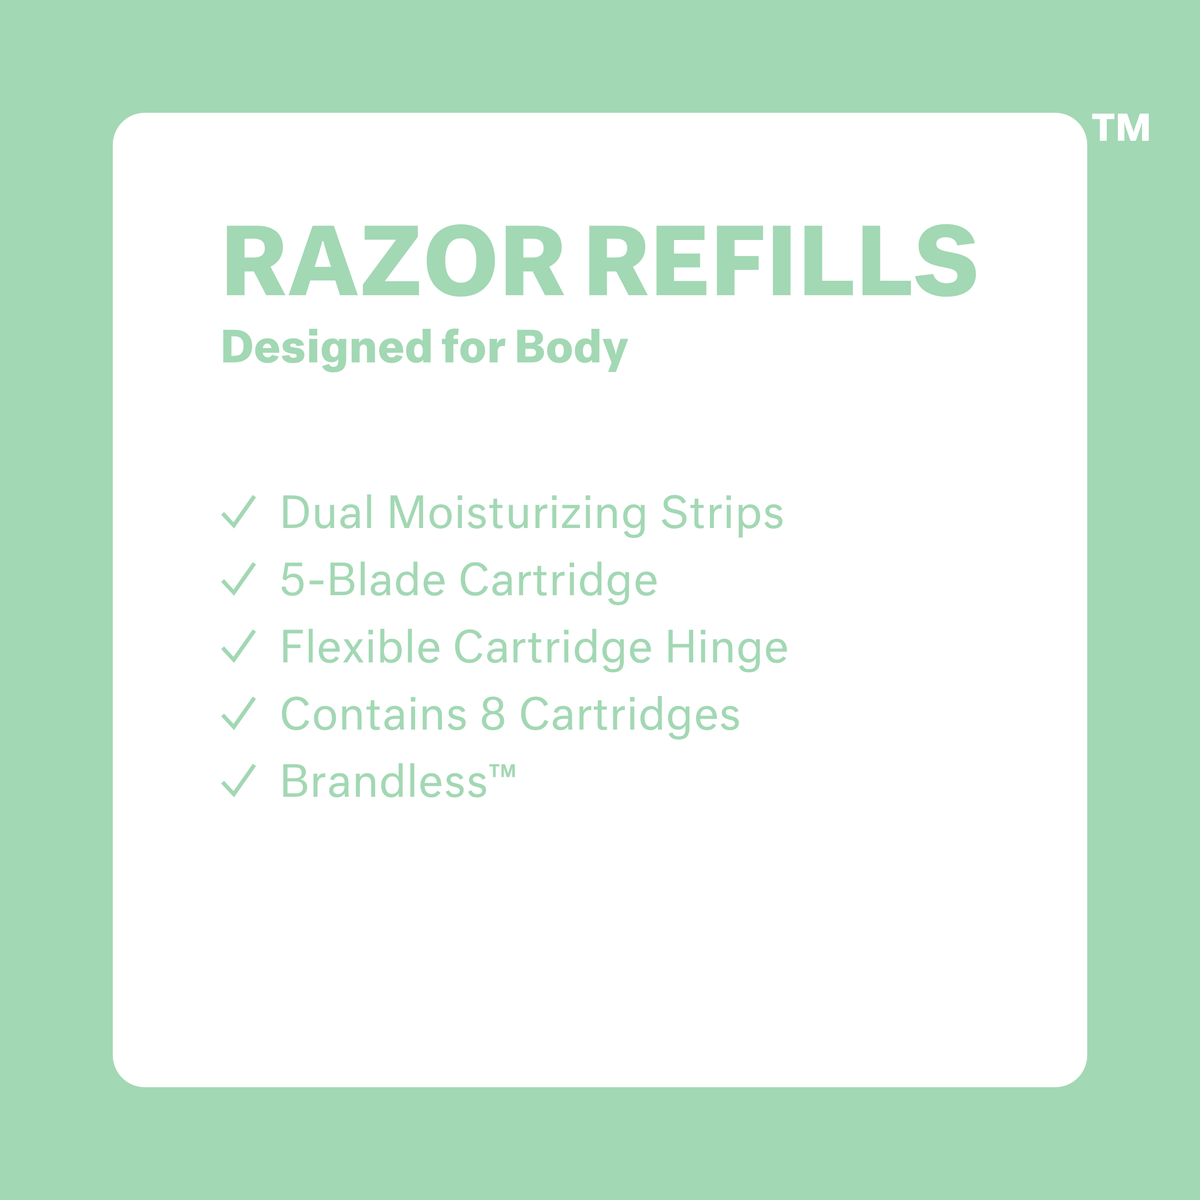 Razor Refills, Designed for body. Dual moisturizing strips, 5-blade cartridge, flexible cartridge hinge, contains 8 cartridges, brandless.